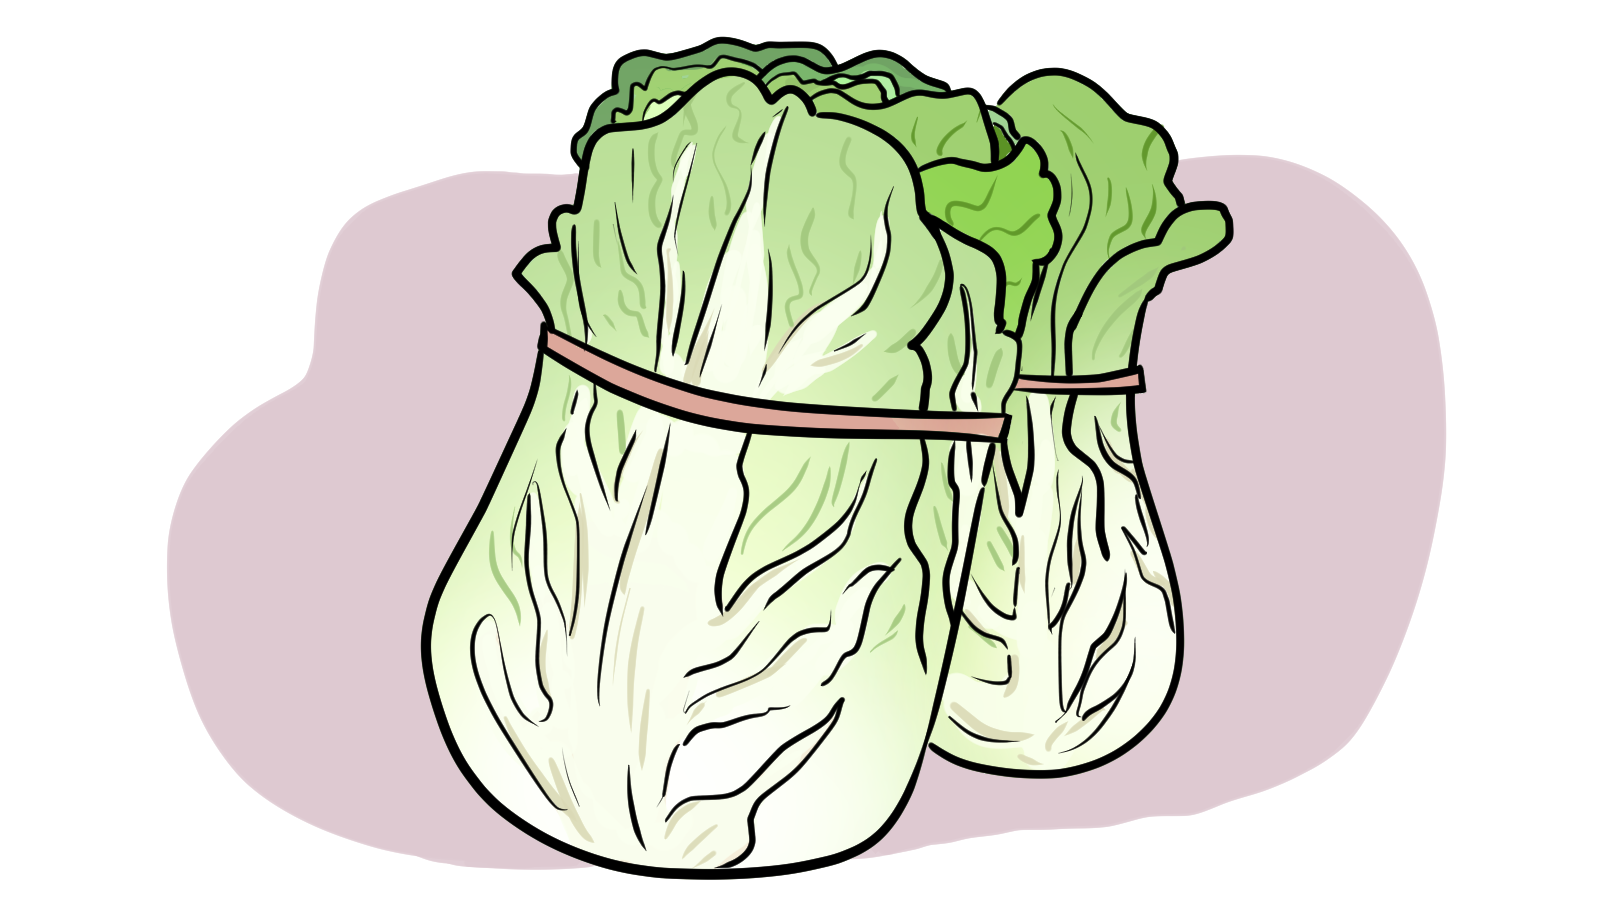 Nappa cabbage